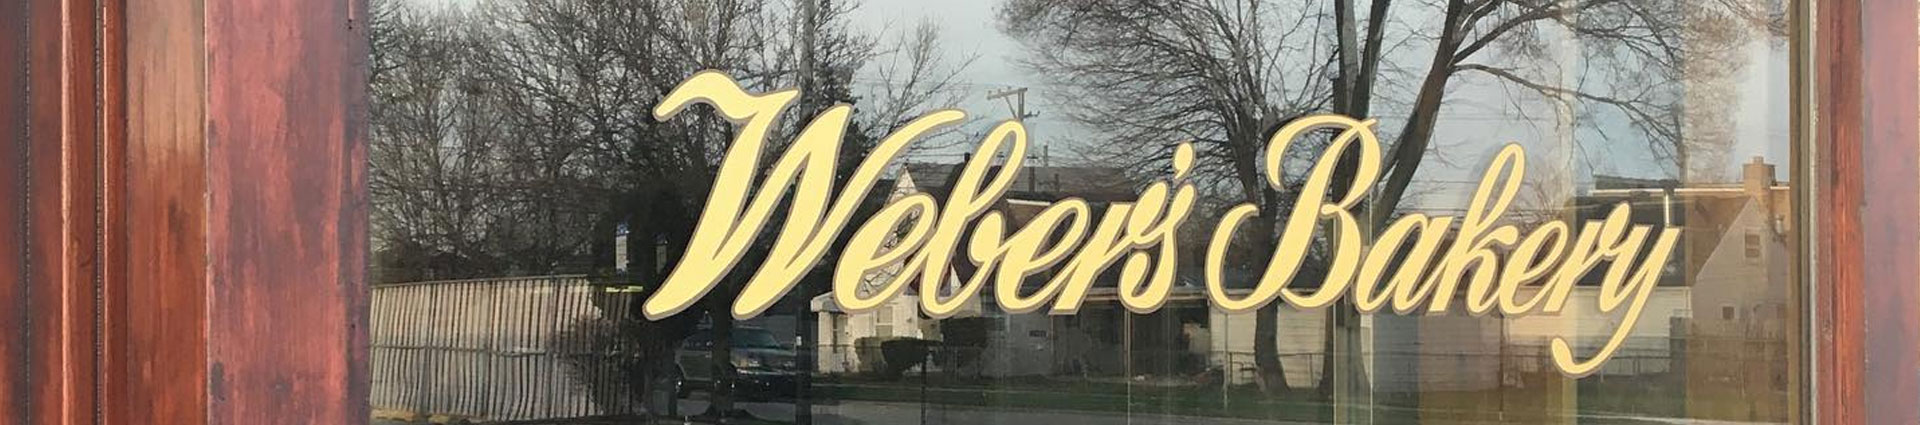 Weber's Bakery window sign